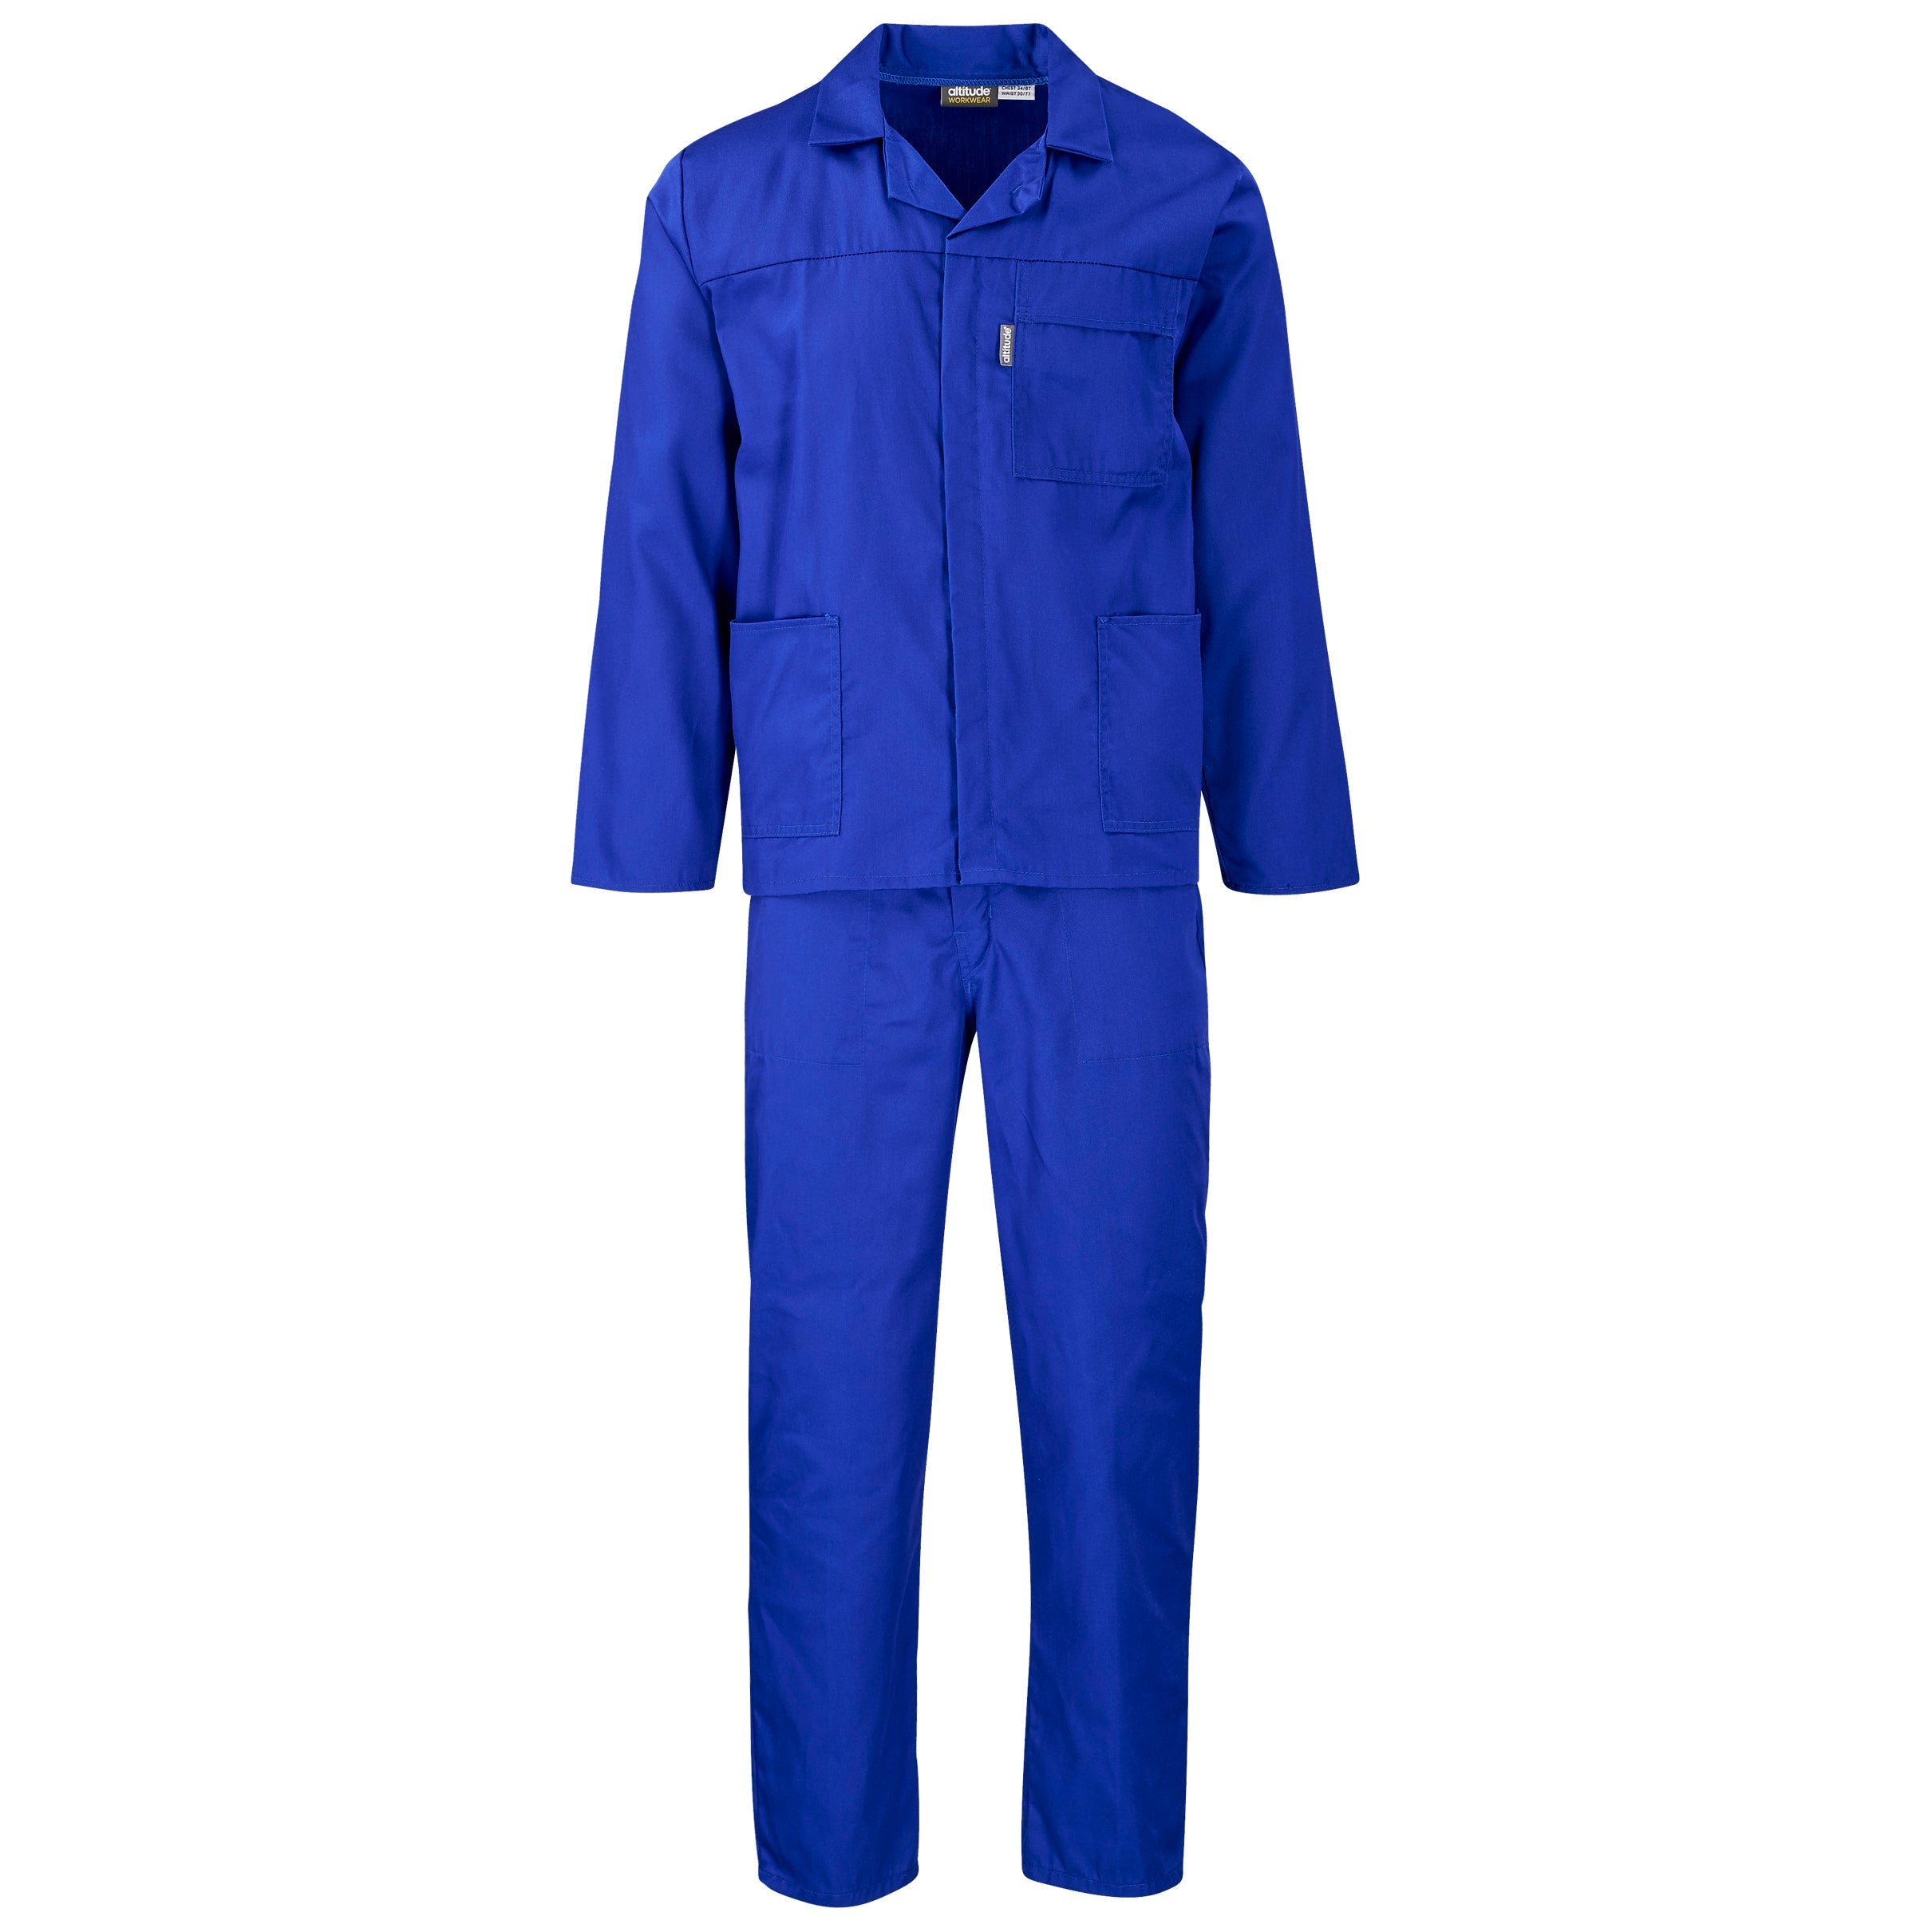 Trade Polycotton Conti Suit 32 / Royal Blue / RB